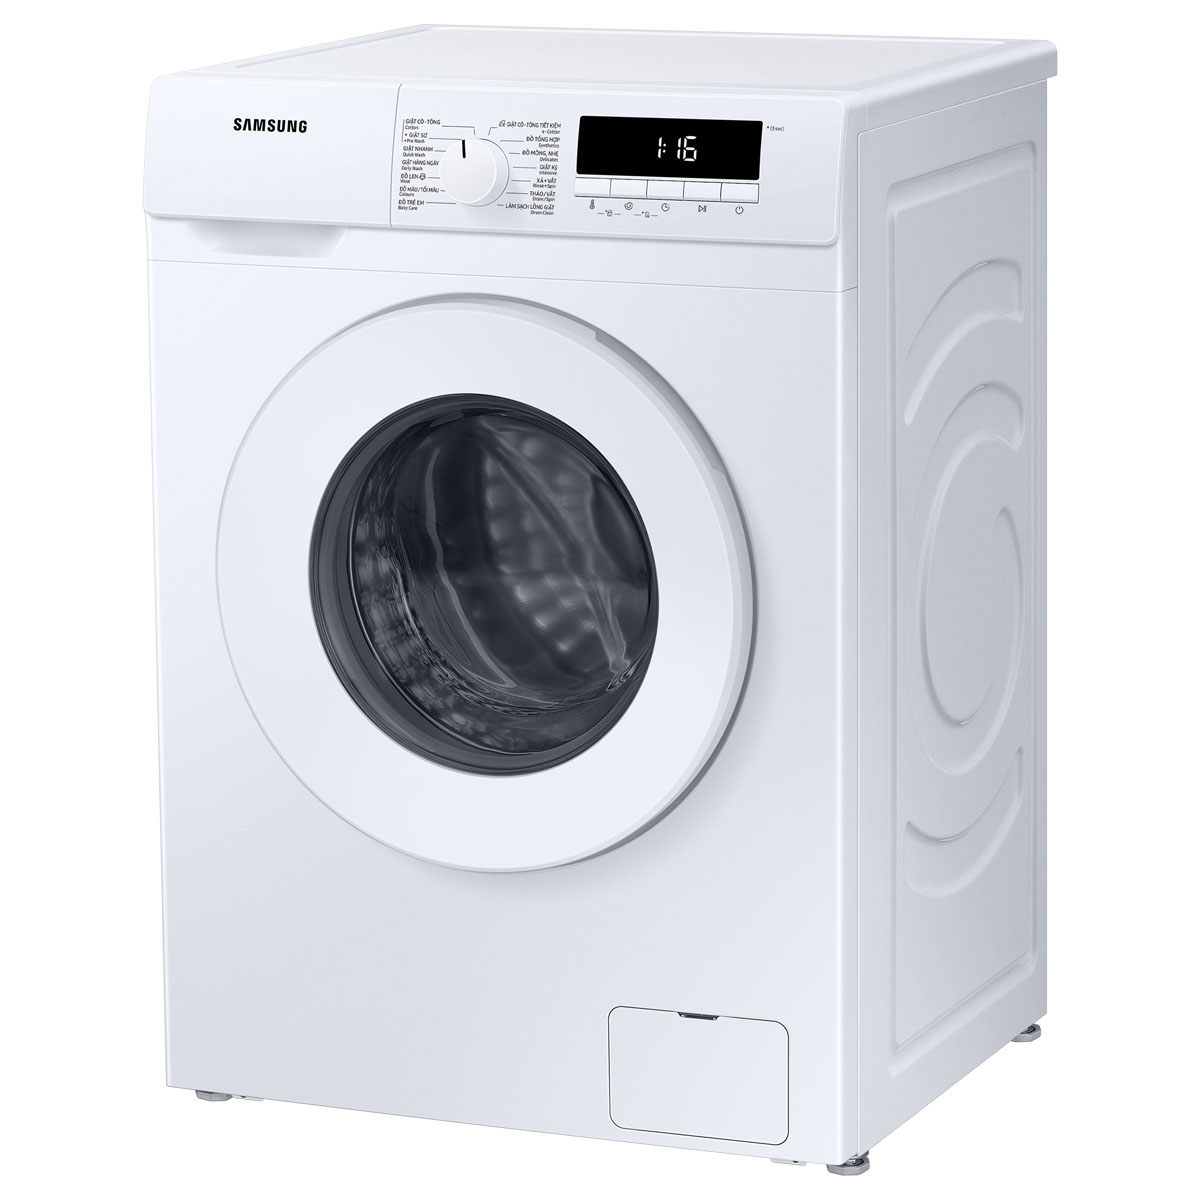 Máy giặt Samsung cửa trước Digital Inverter 9kg WW90T3040WW/SV - Chỉ giao HCM